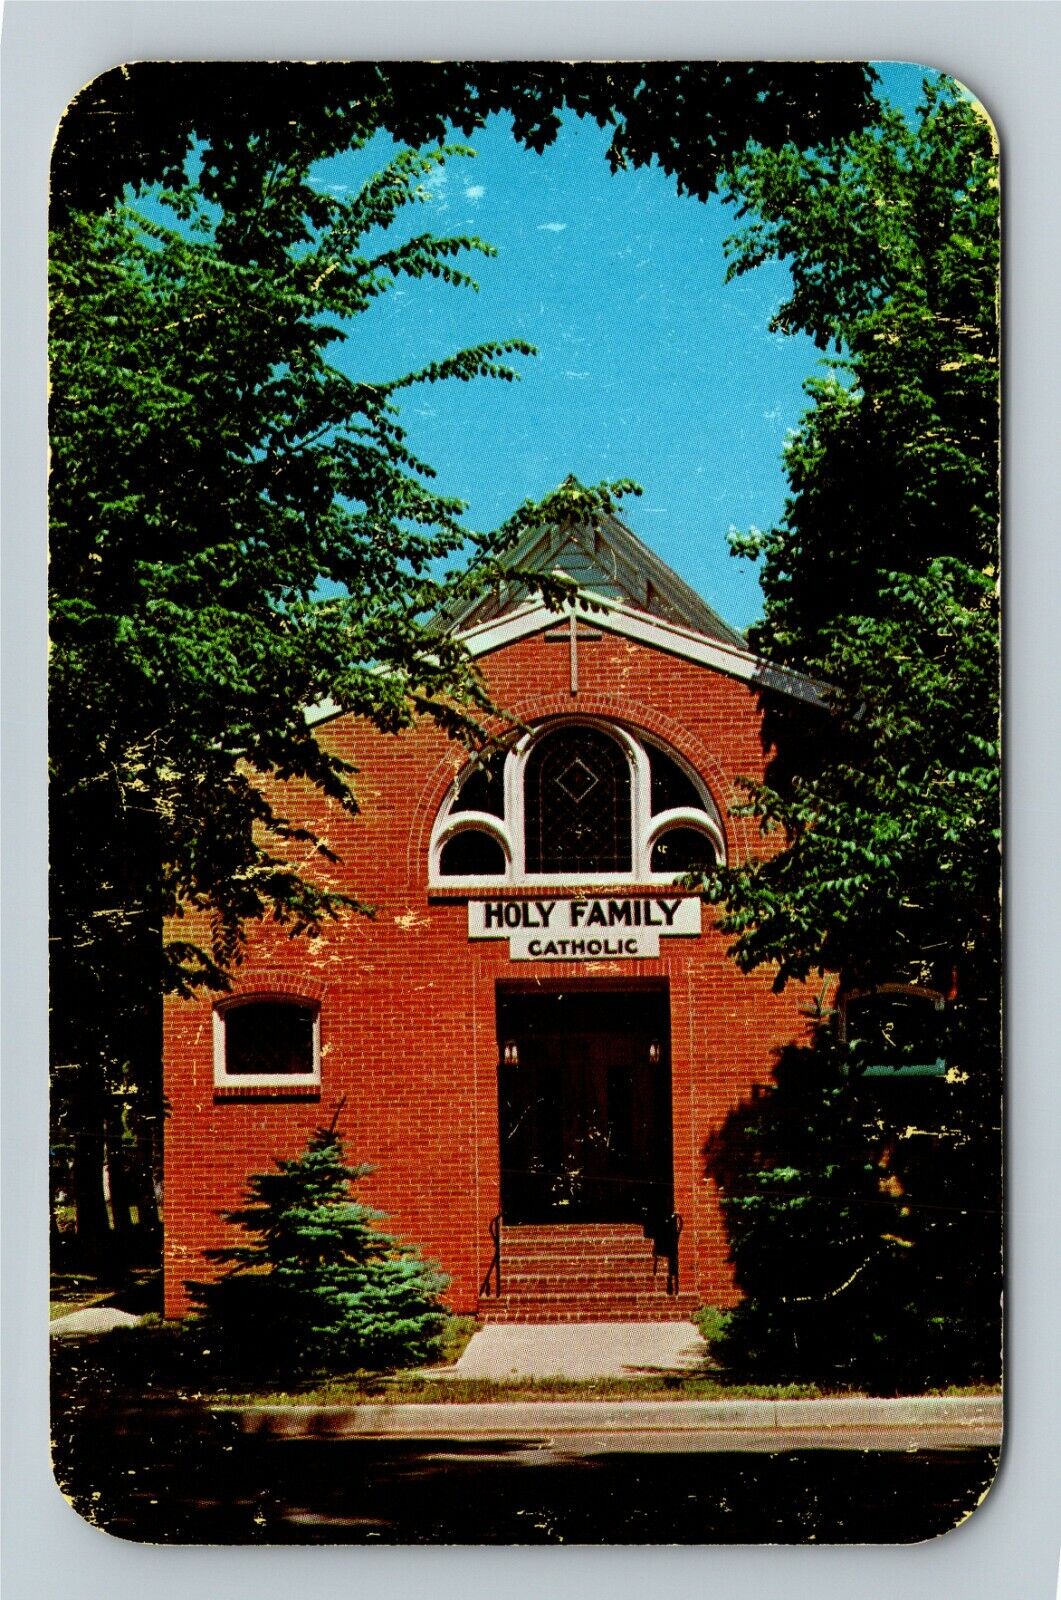 Decatur MI-Michigan, Holy Family Catholic Church Vintage Souvenir Postcard